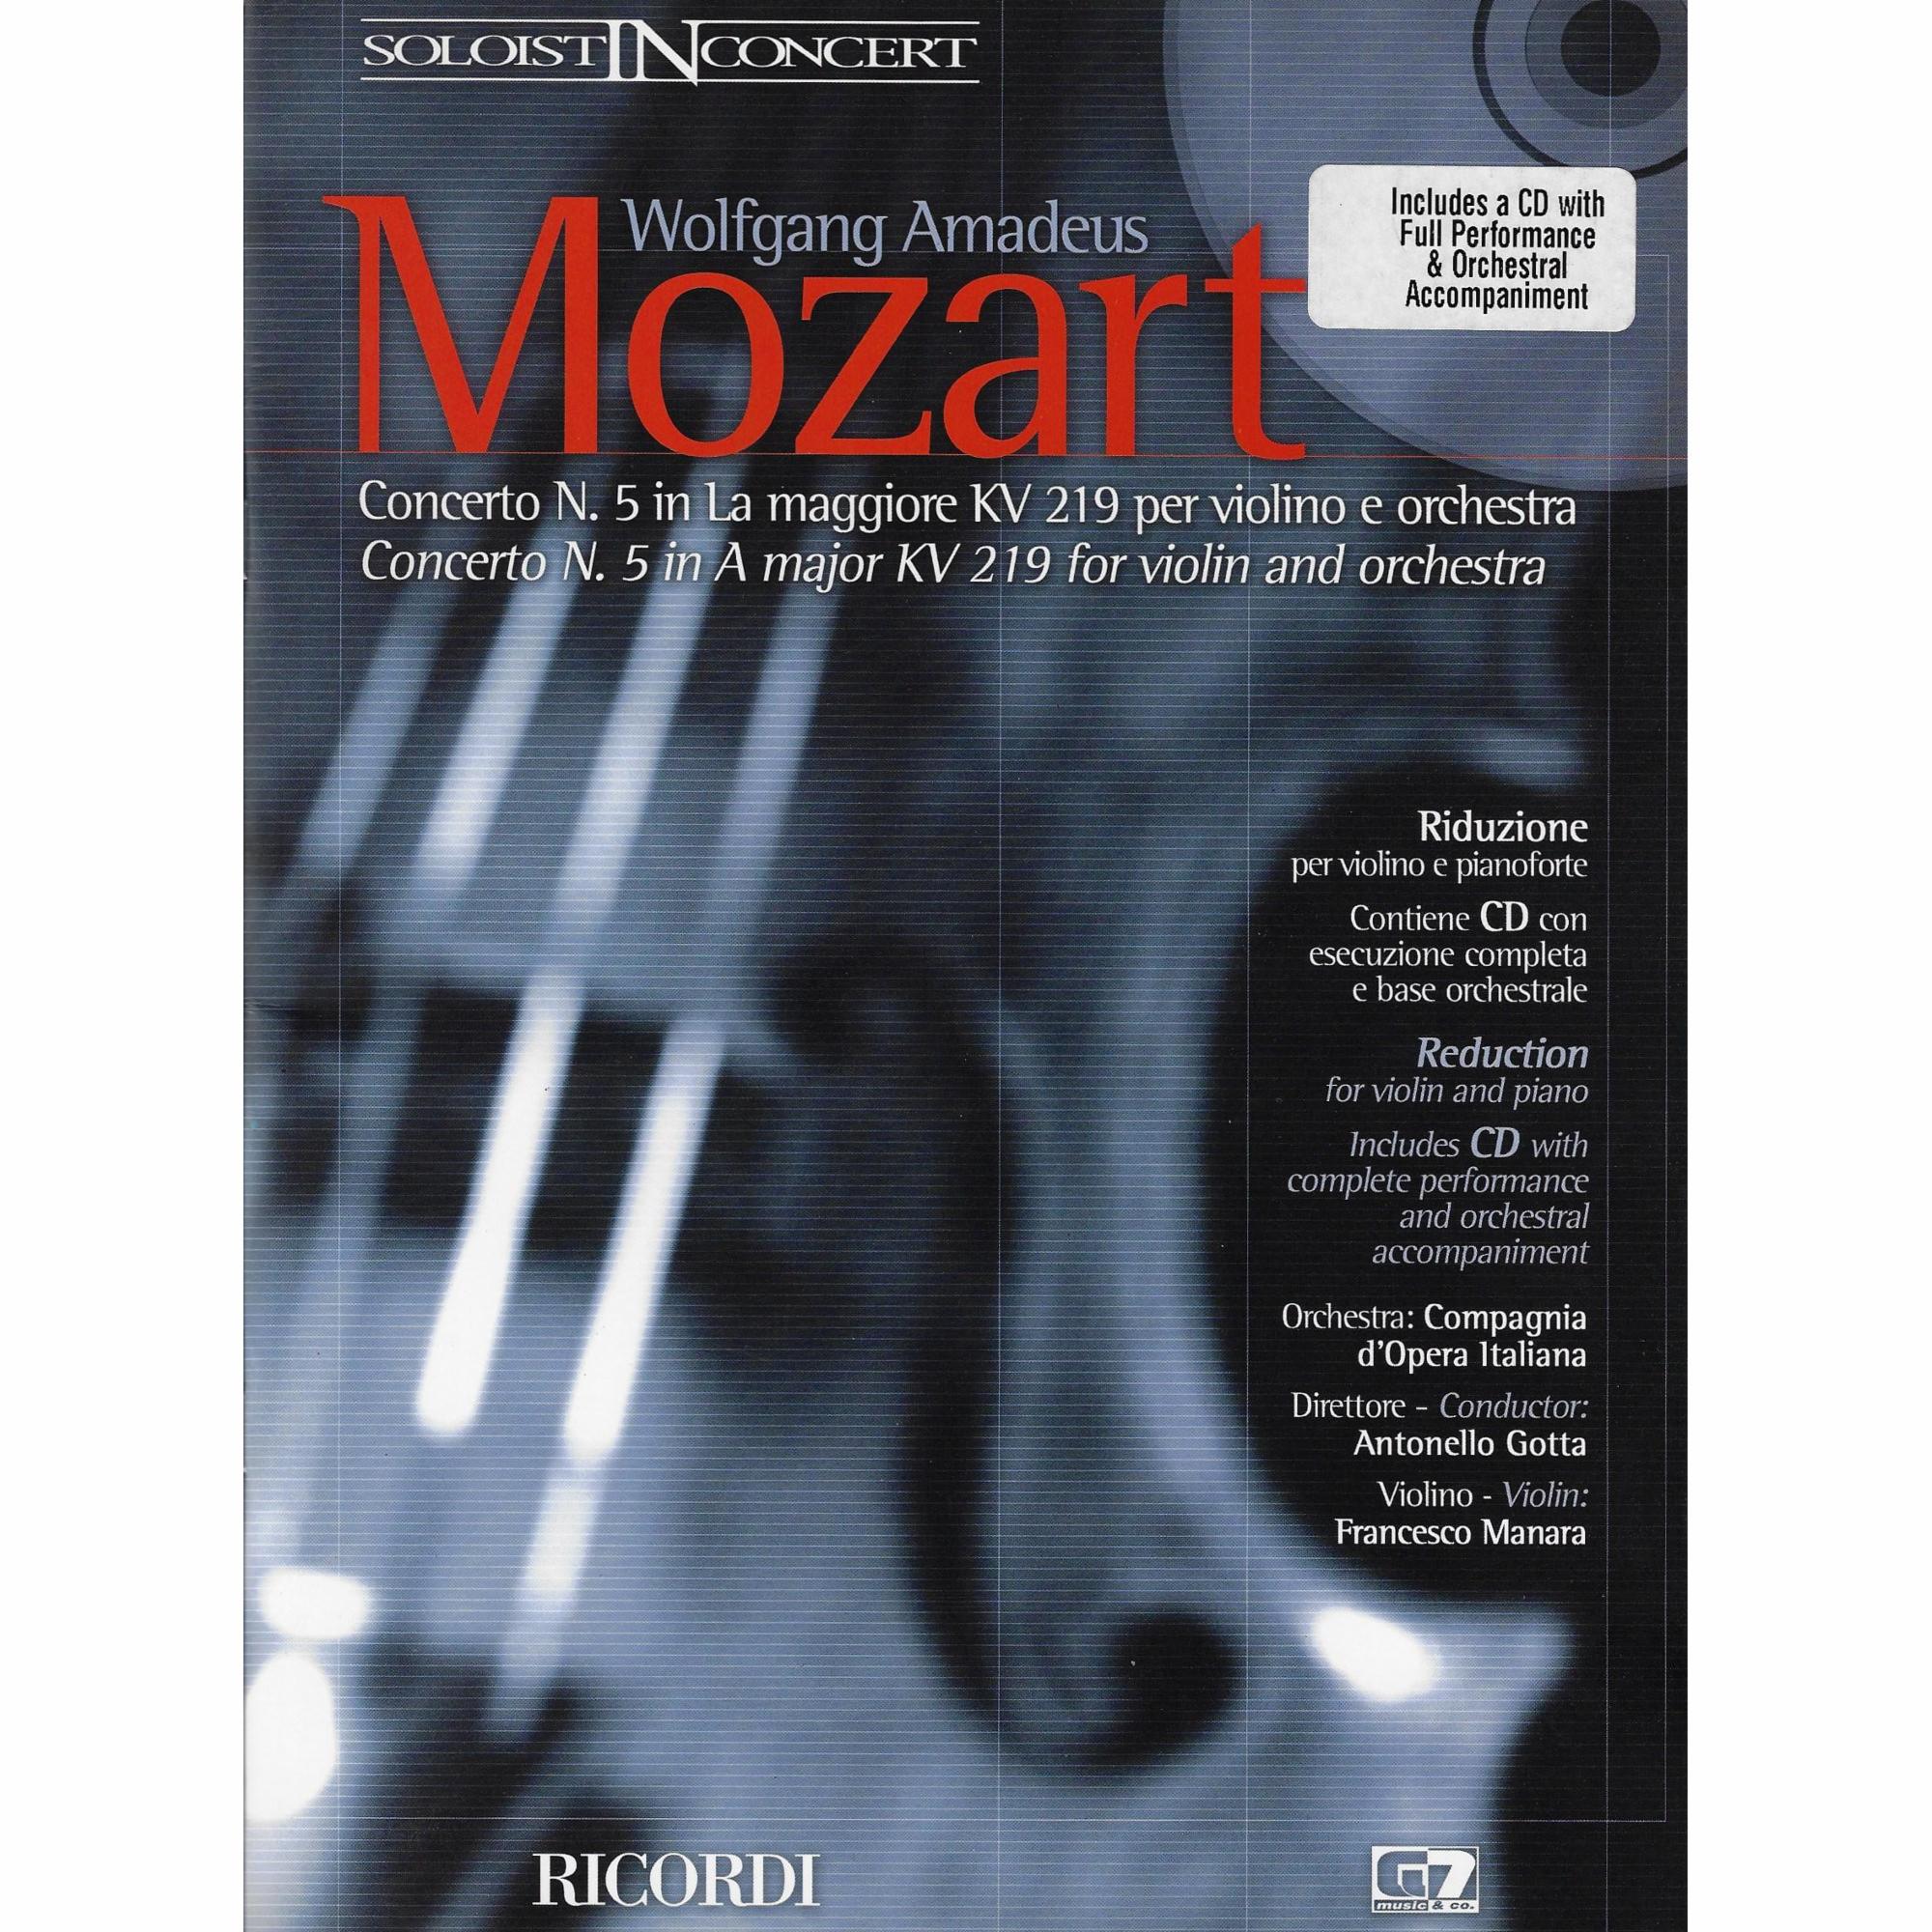 Violin Concerto No. 5 in A Major, K. 219 (w/ orchestral acc. on CD)